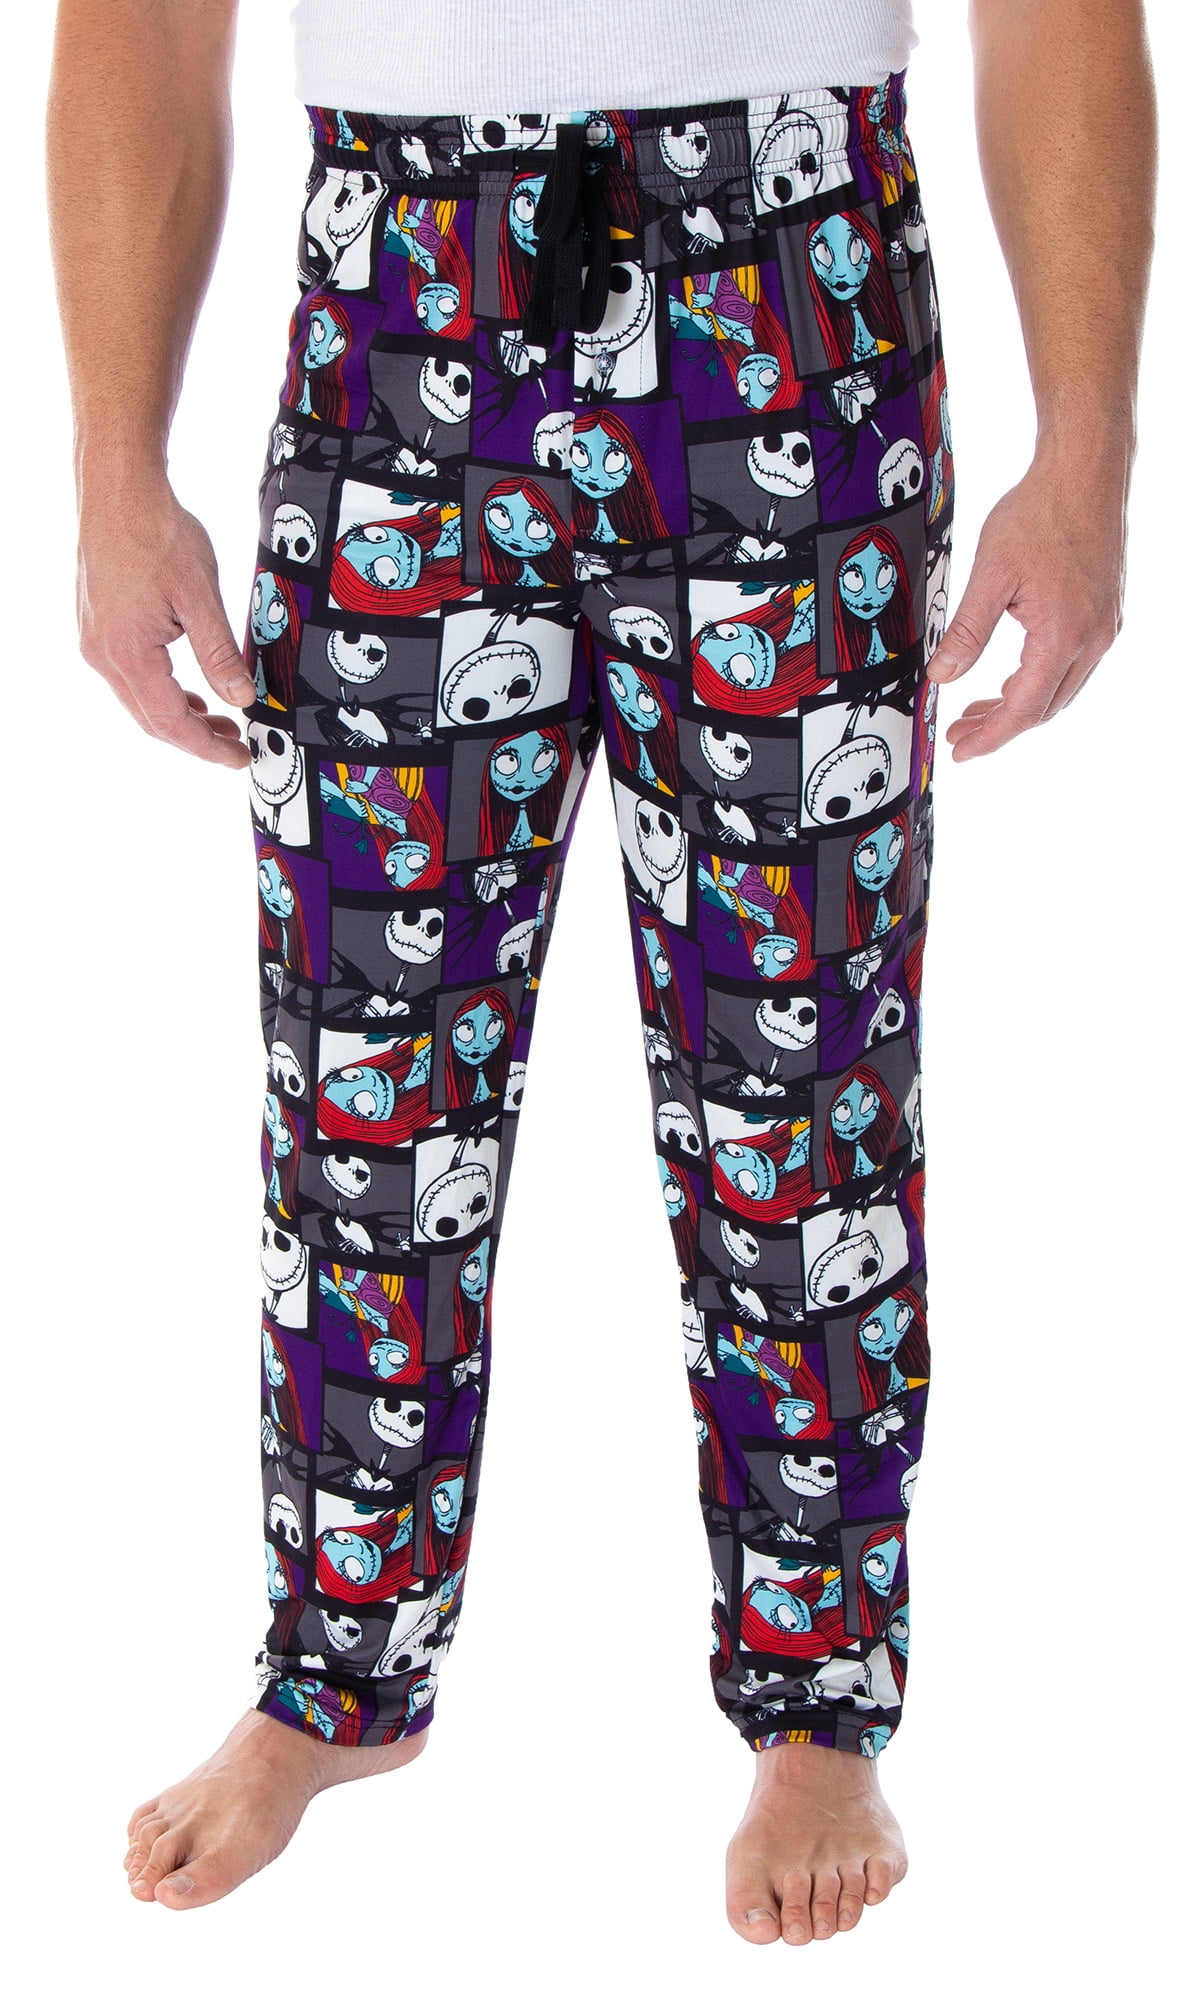 Jack Skellington Sleep Pants  S M L XL 2XL Lounge Pant Pajamas Glows in dark 